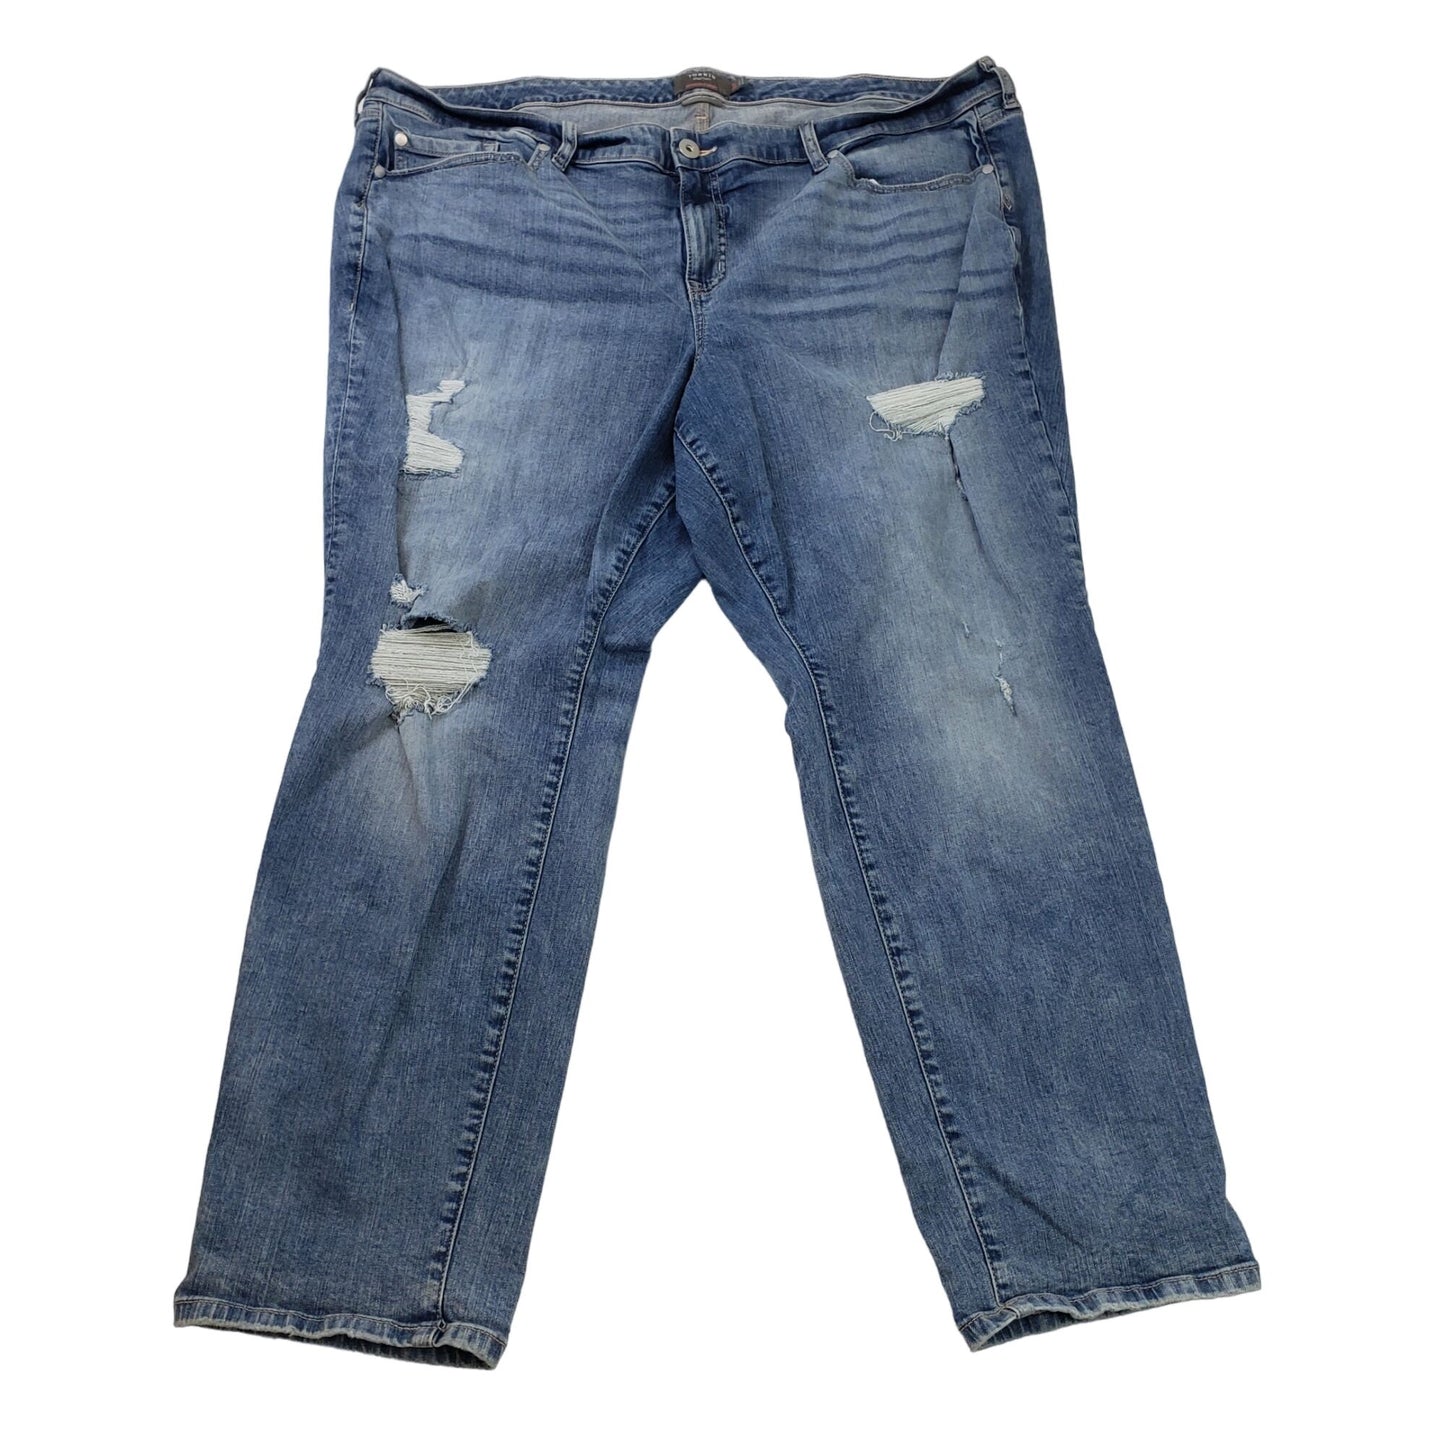 Torrid Vintage Straight Distressed Jeans Size 24R